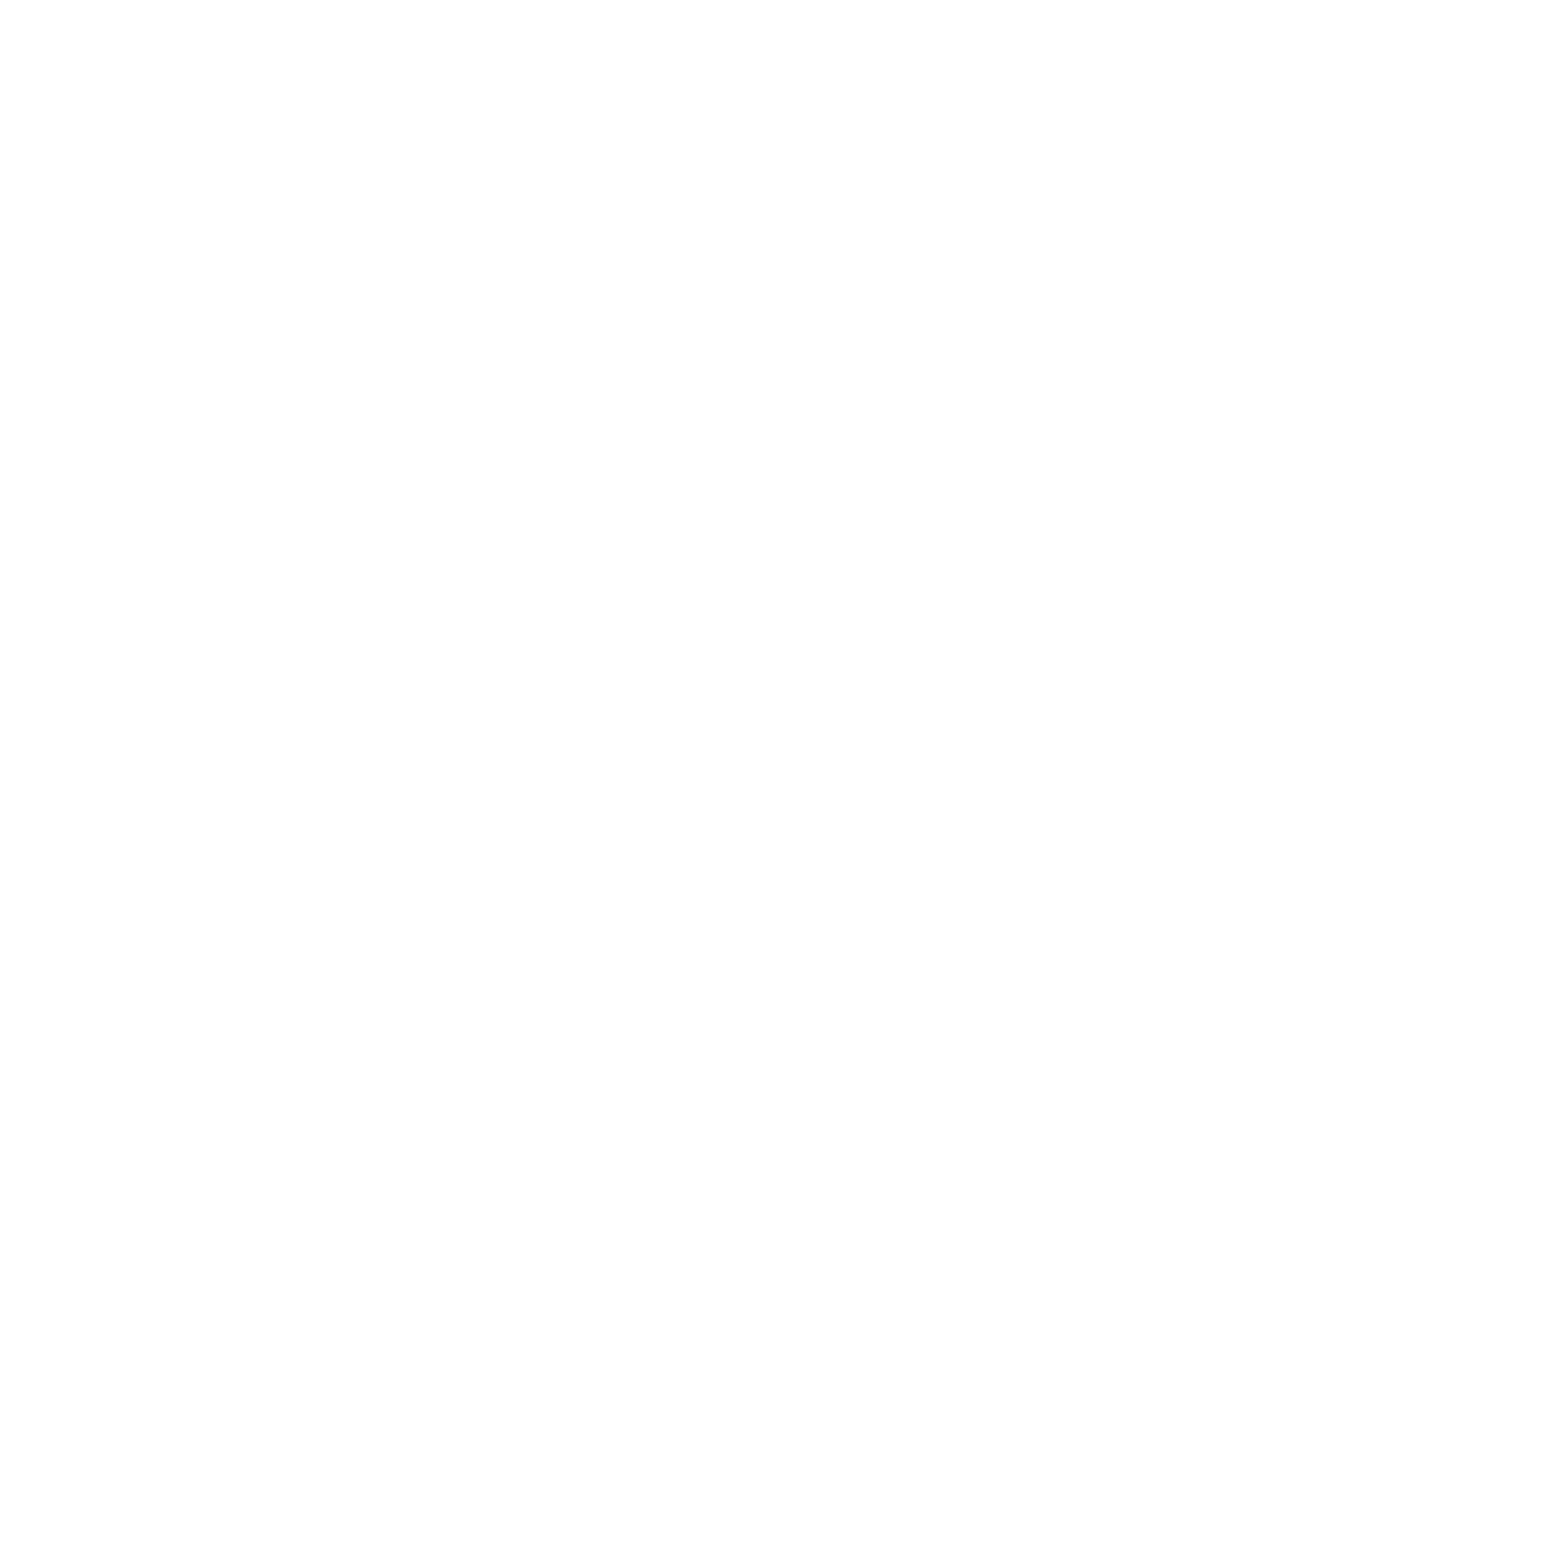 Powell & Creasy Signature White.png